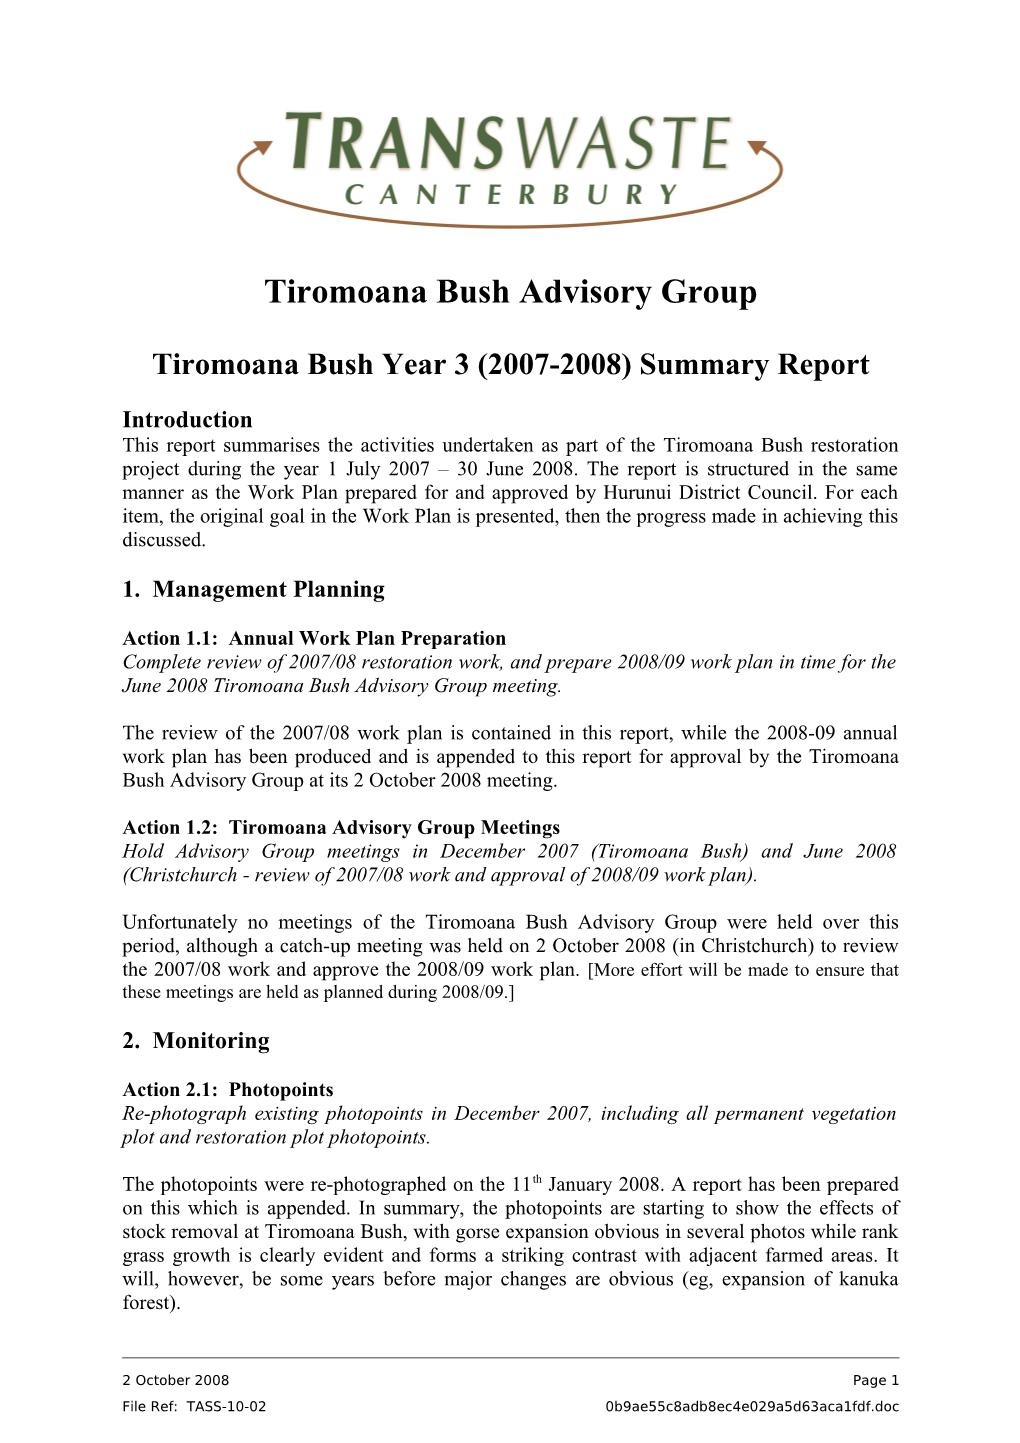 Tiromoana Bush Year 2 (2006-2007) Work Plan s1